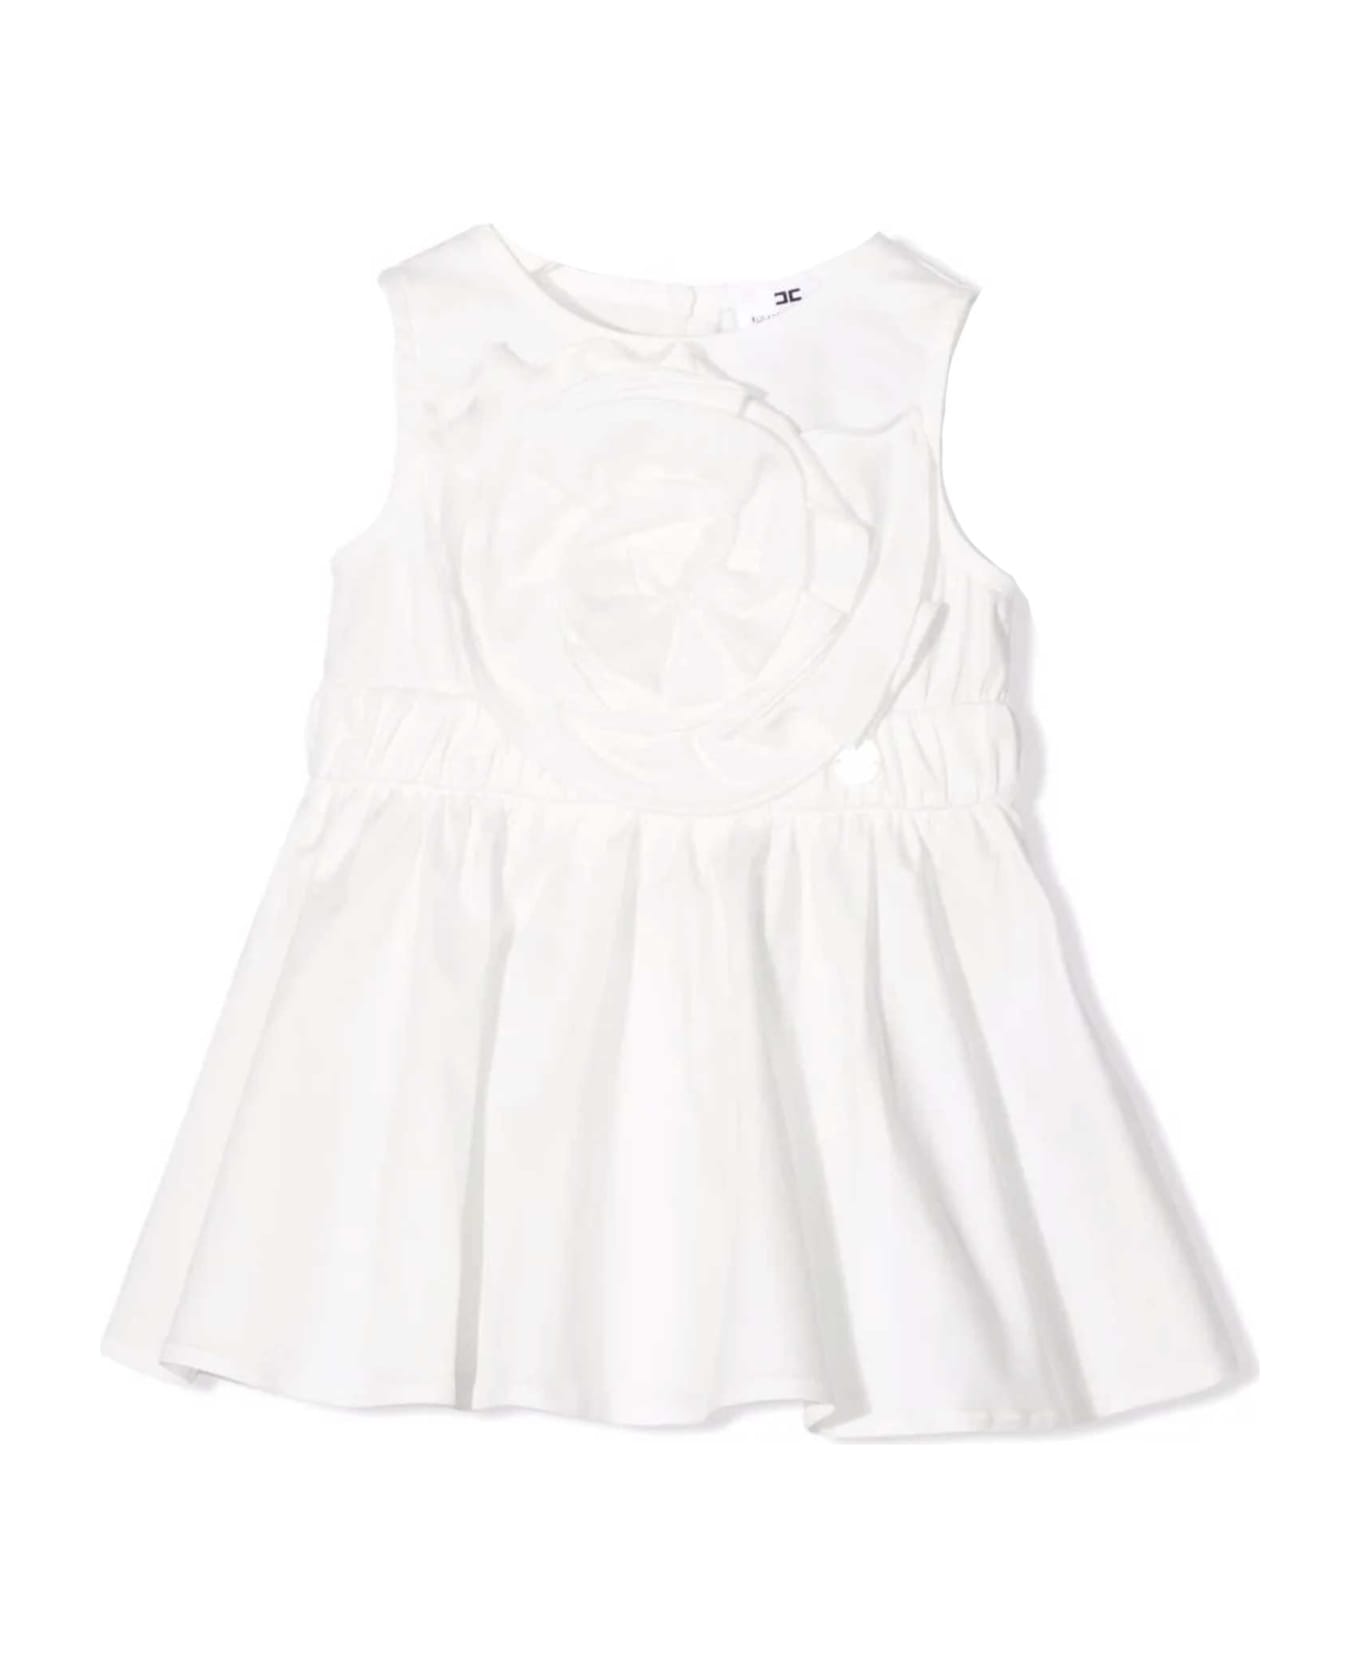 Elisabetta Franchi La Mia Bambina White Dress - Bianco